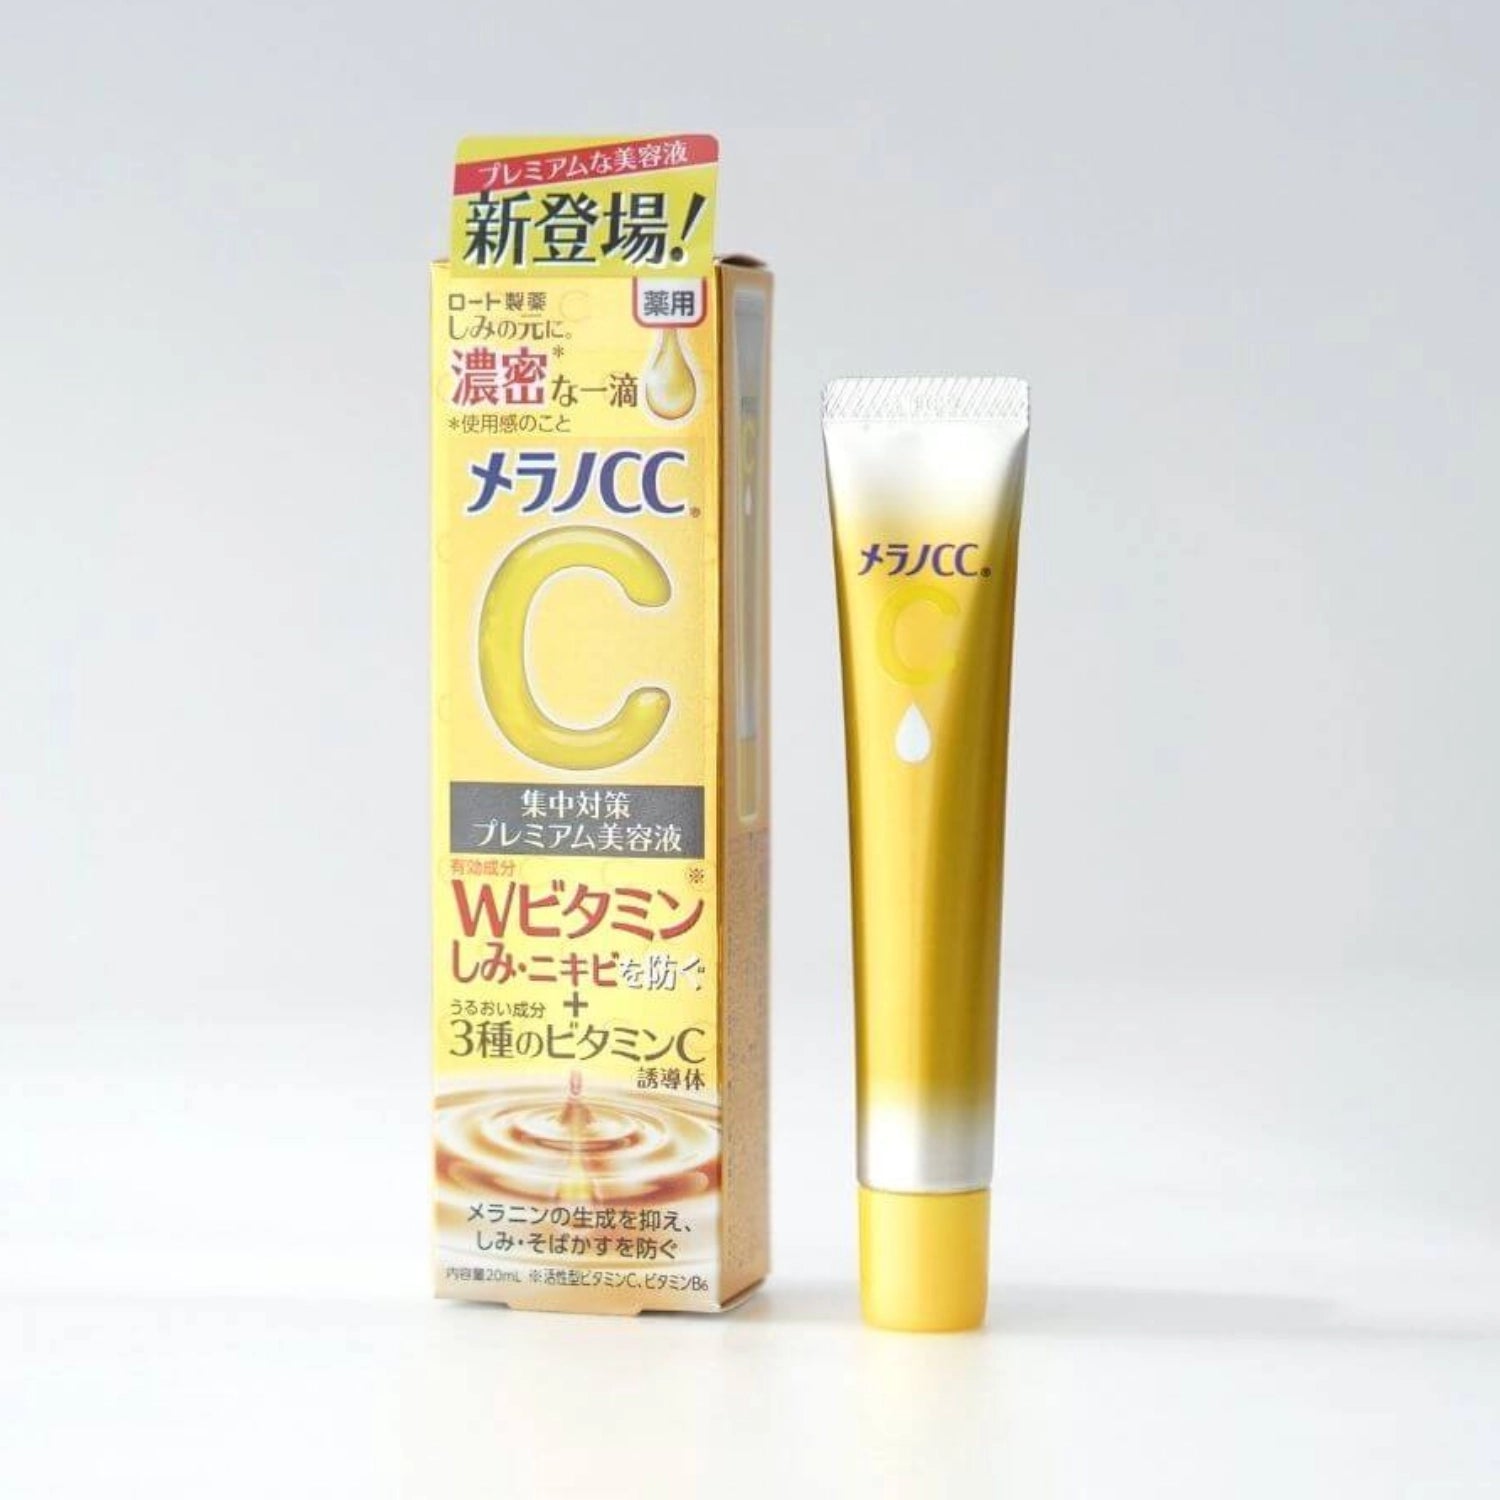 Melano CC Double Strength Vitamin C Serum 20g - Buy Me Japan